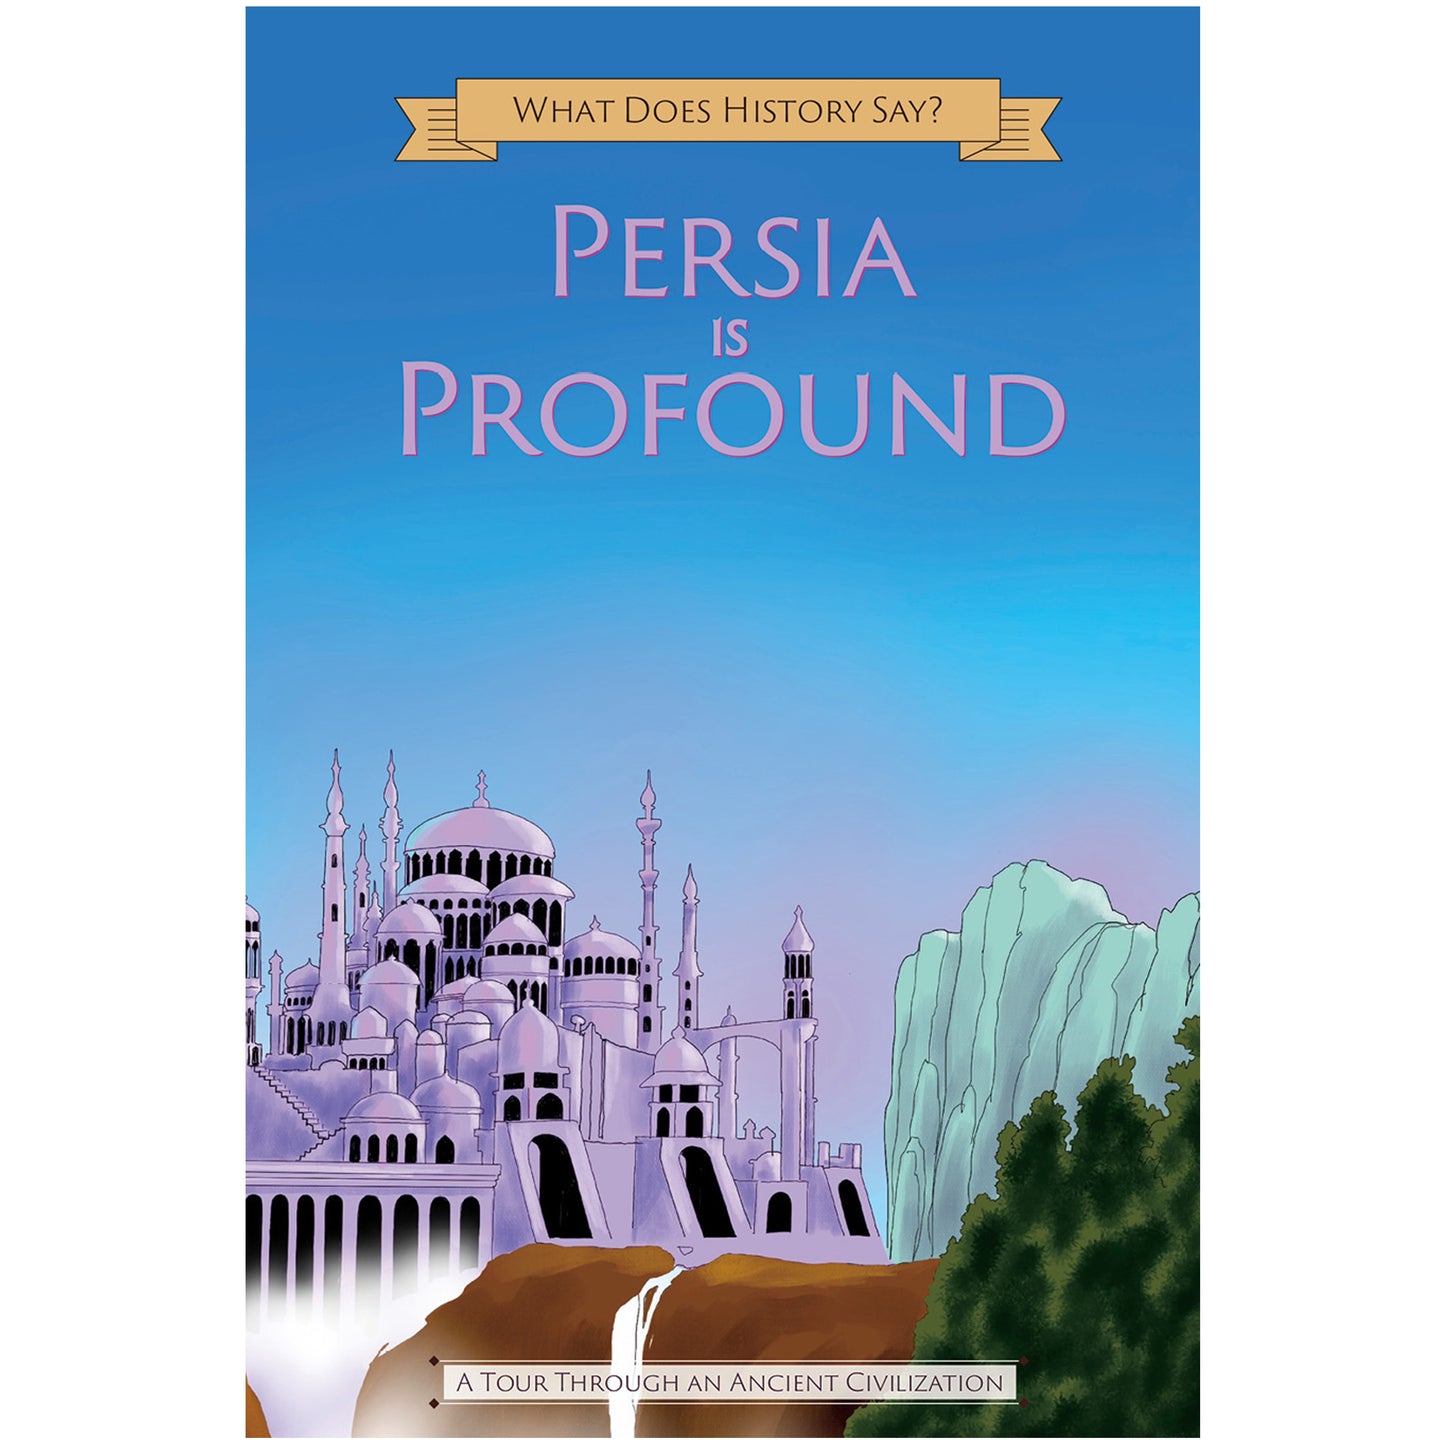 Persia is Profound